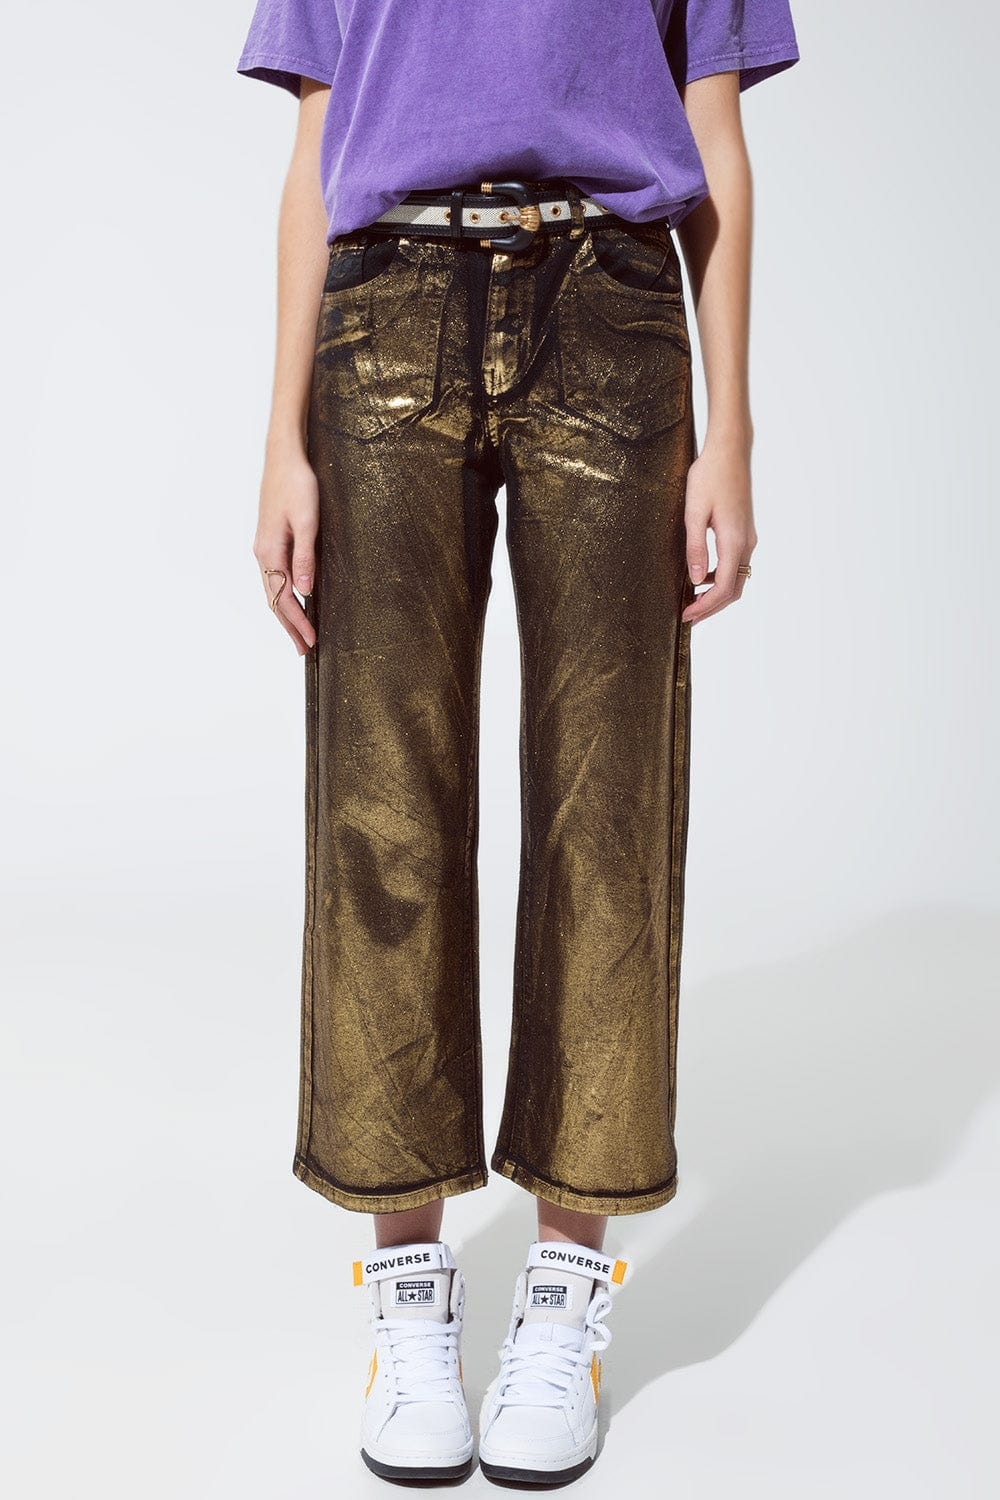 Q2 Women's Jean Black Straight Leg Jeans With Gold Metallic Glow